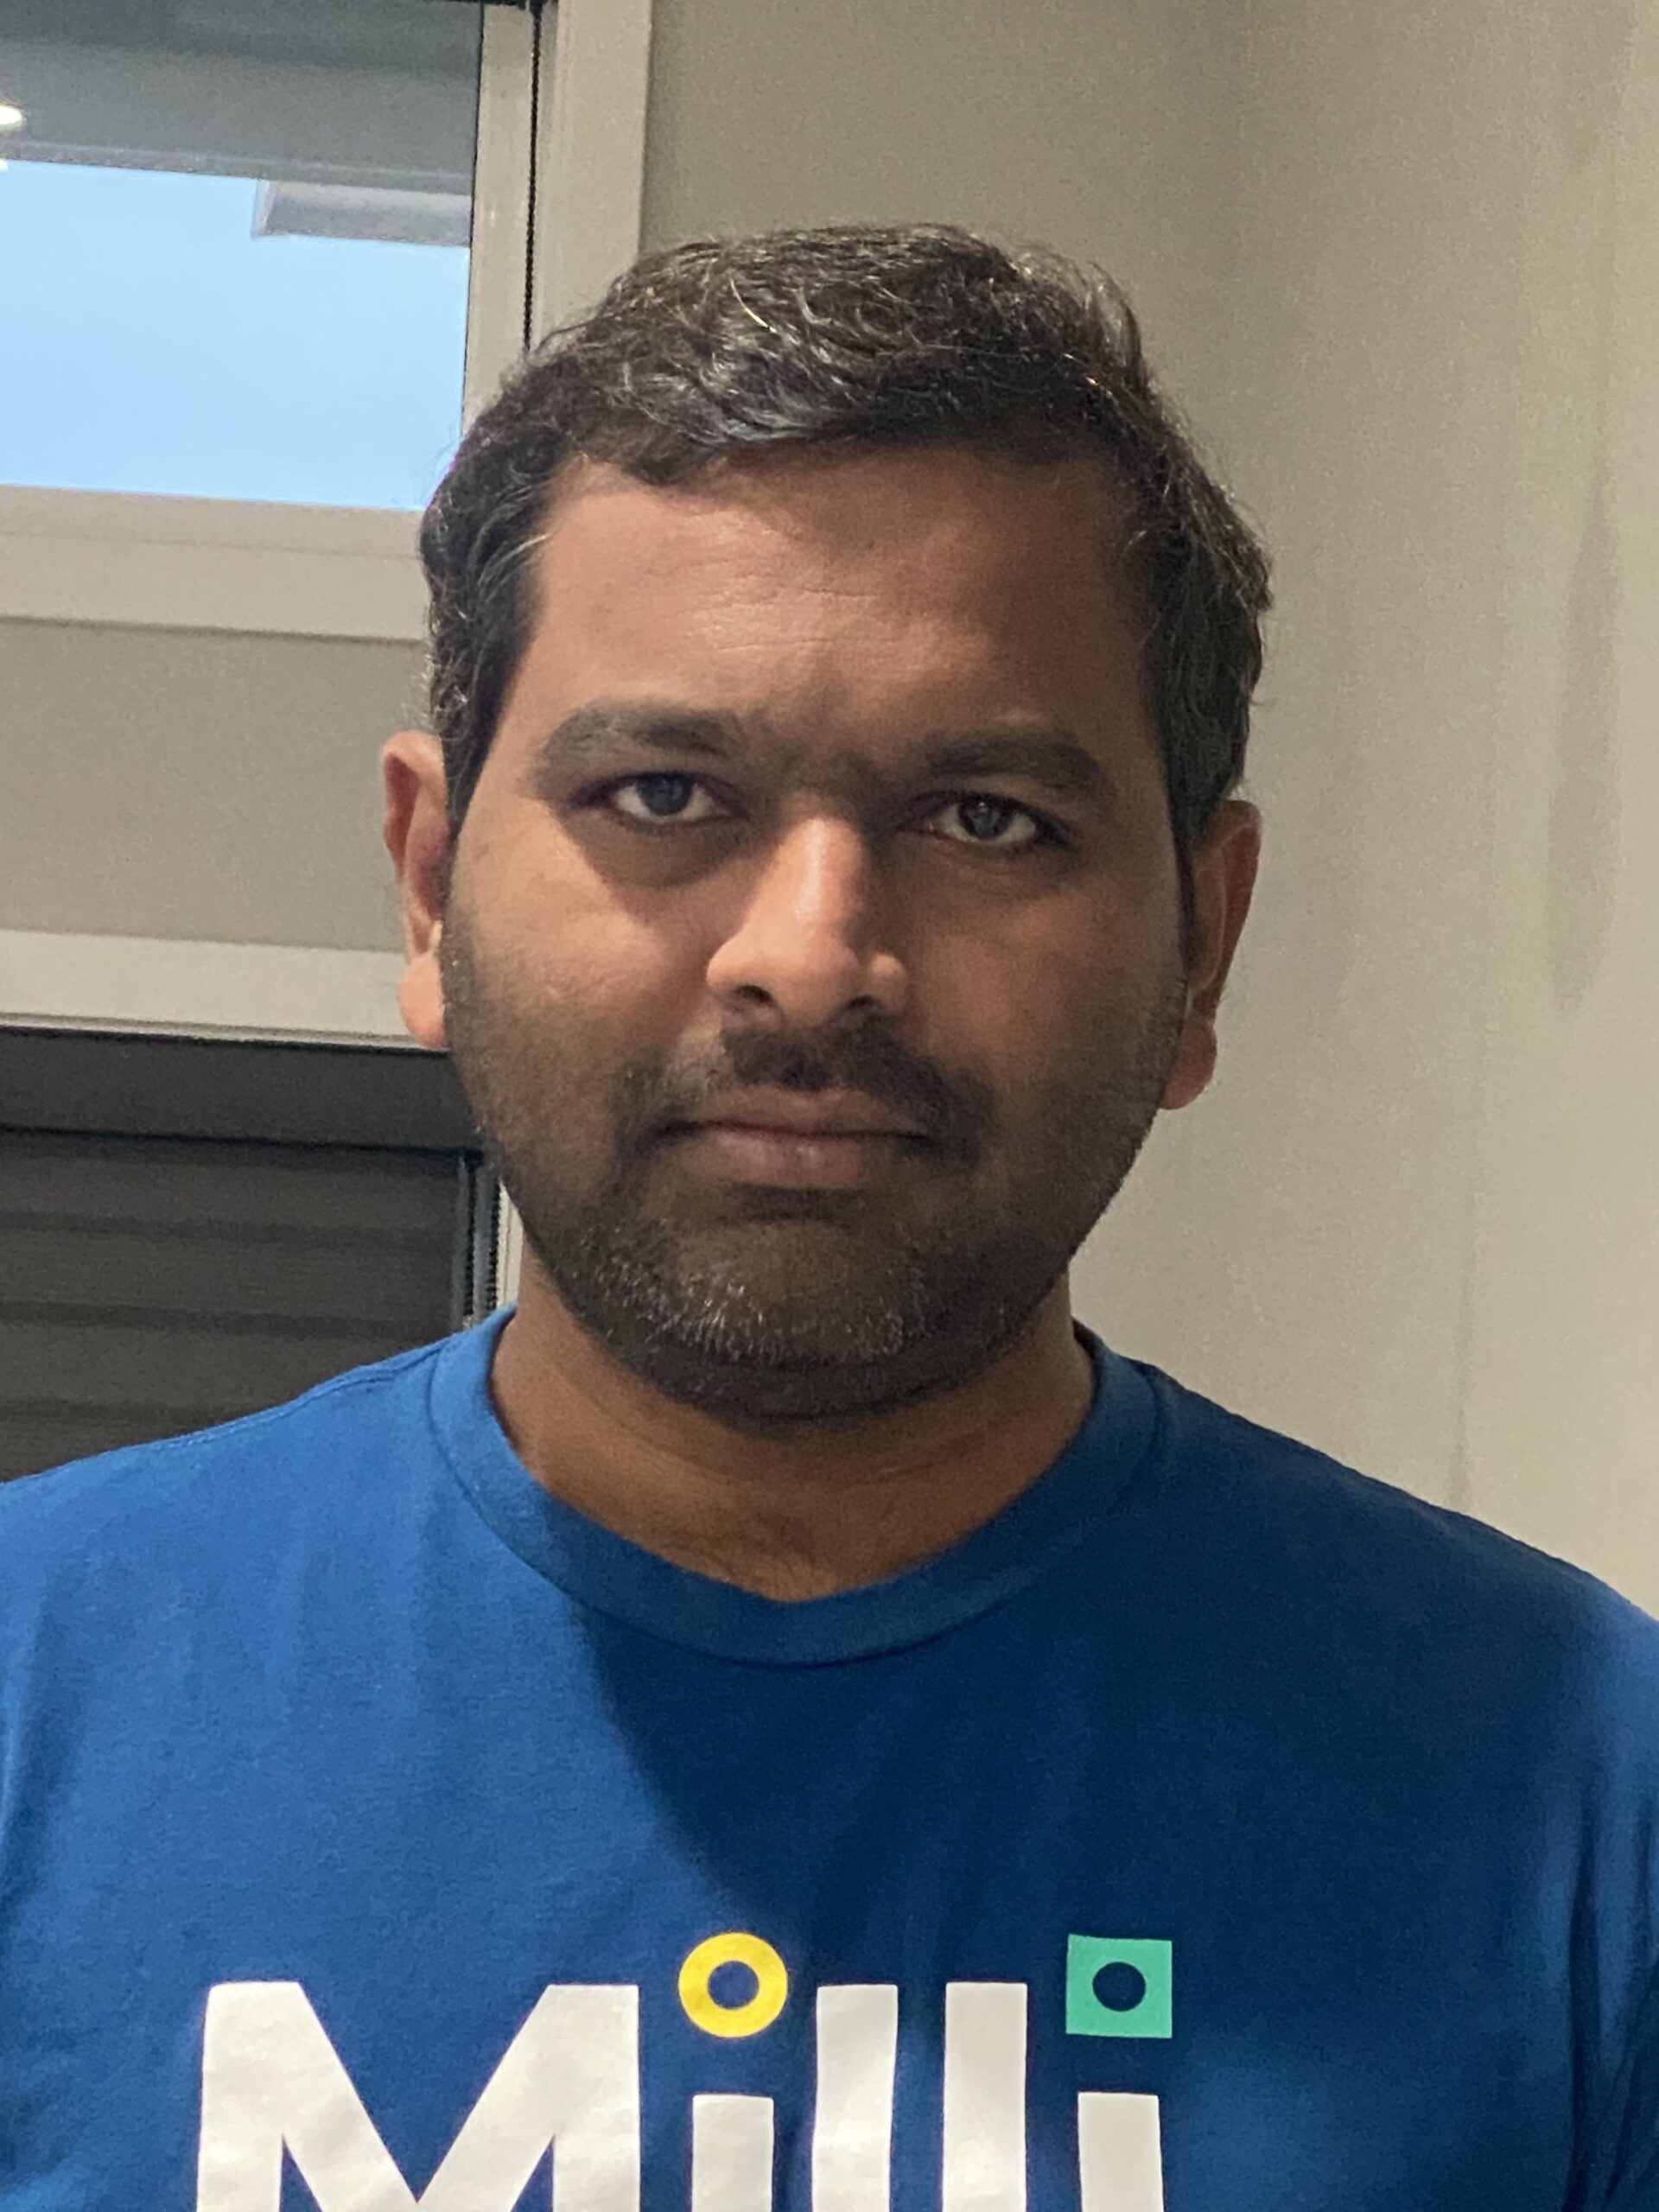 Photo of Sivaramireddy wearing a blue Milli t-shirt